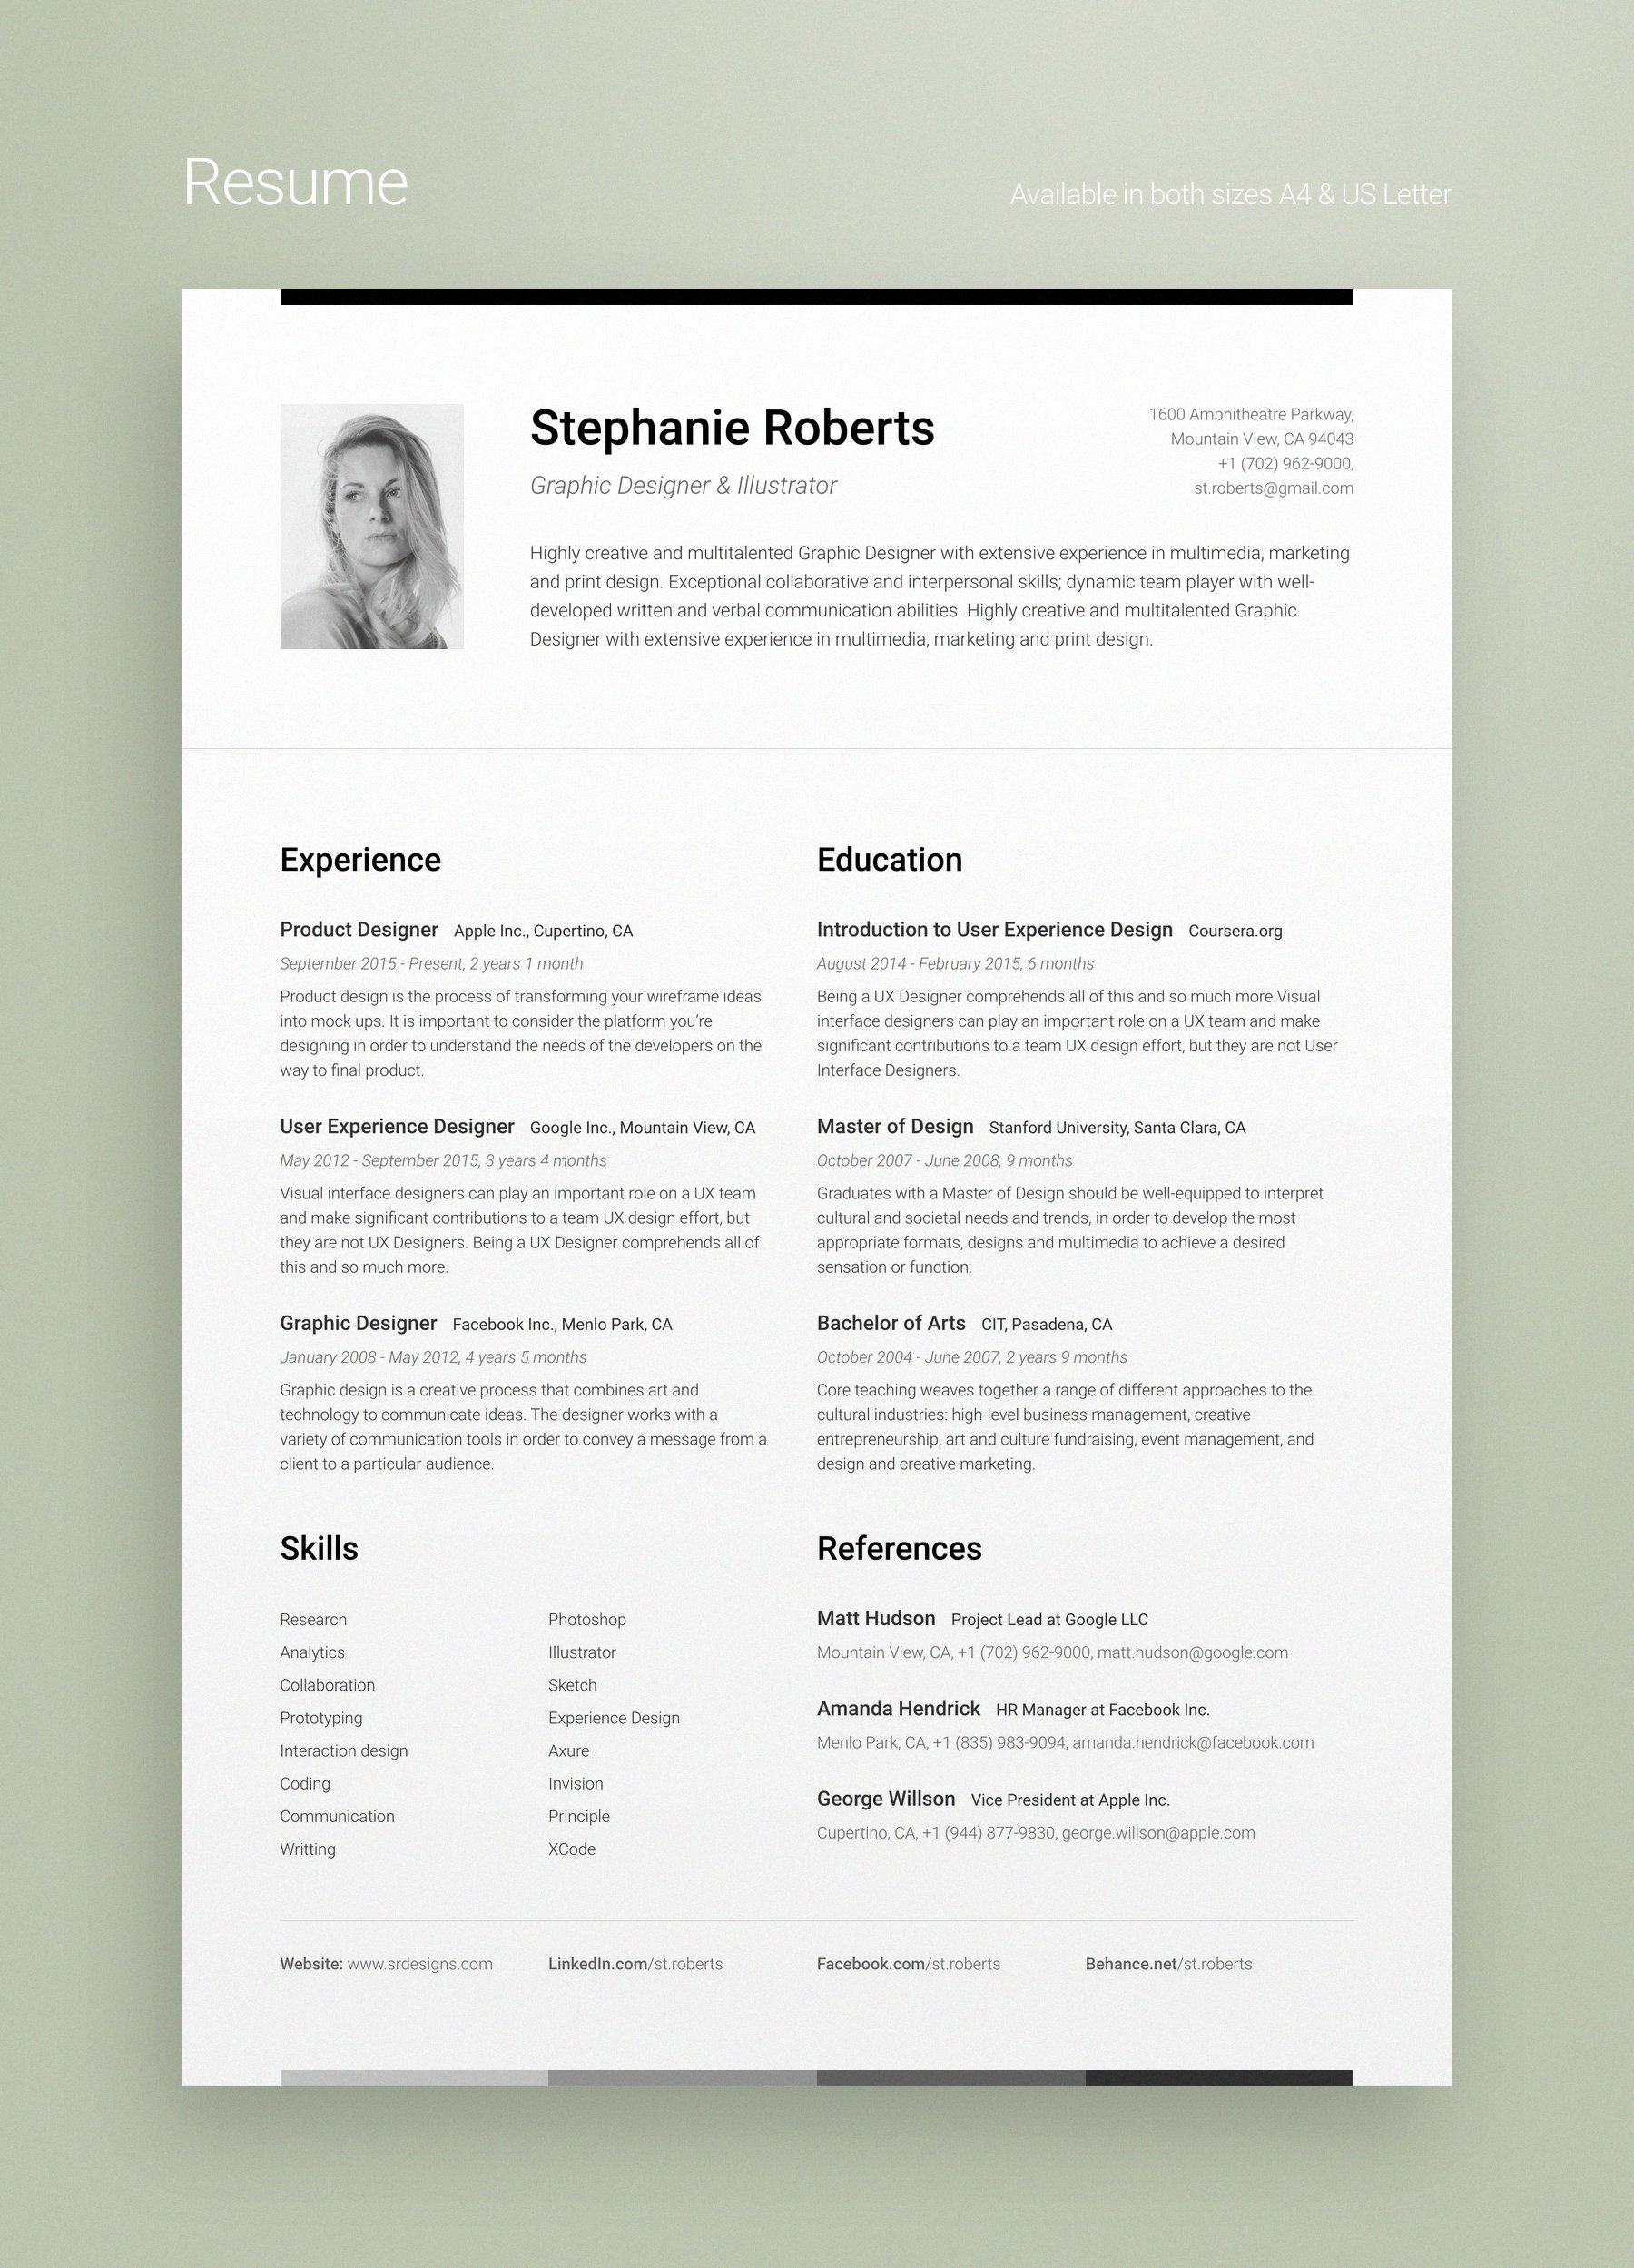 Resume & CV Bundle 1 Horizontal preview image.